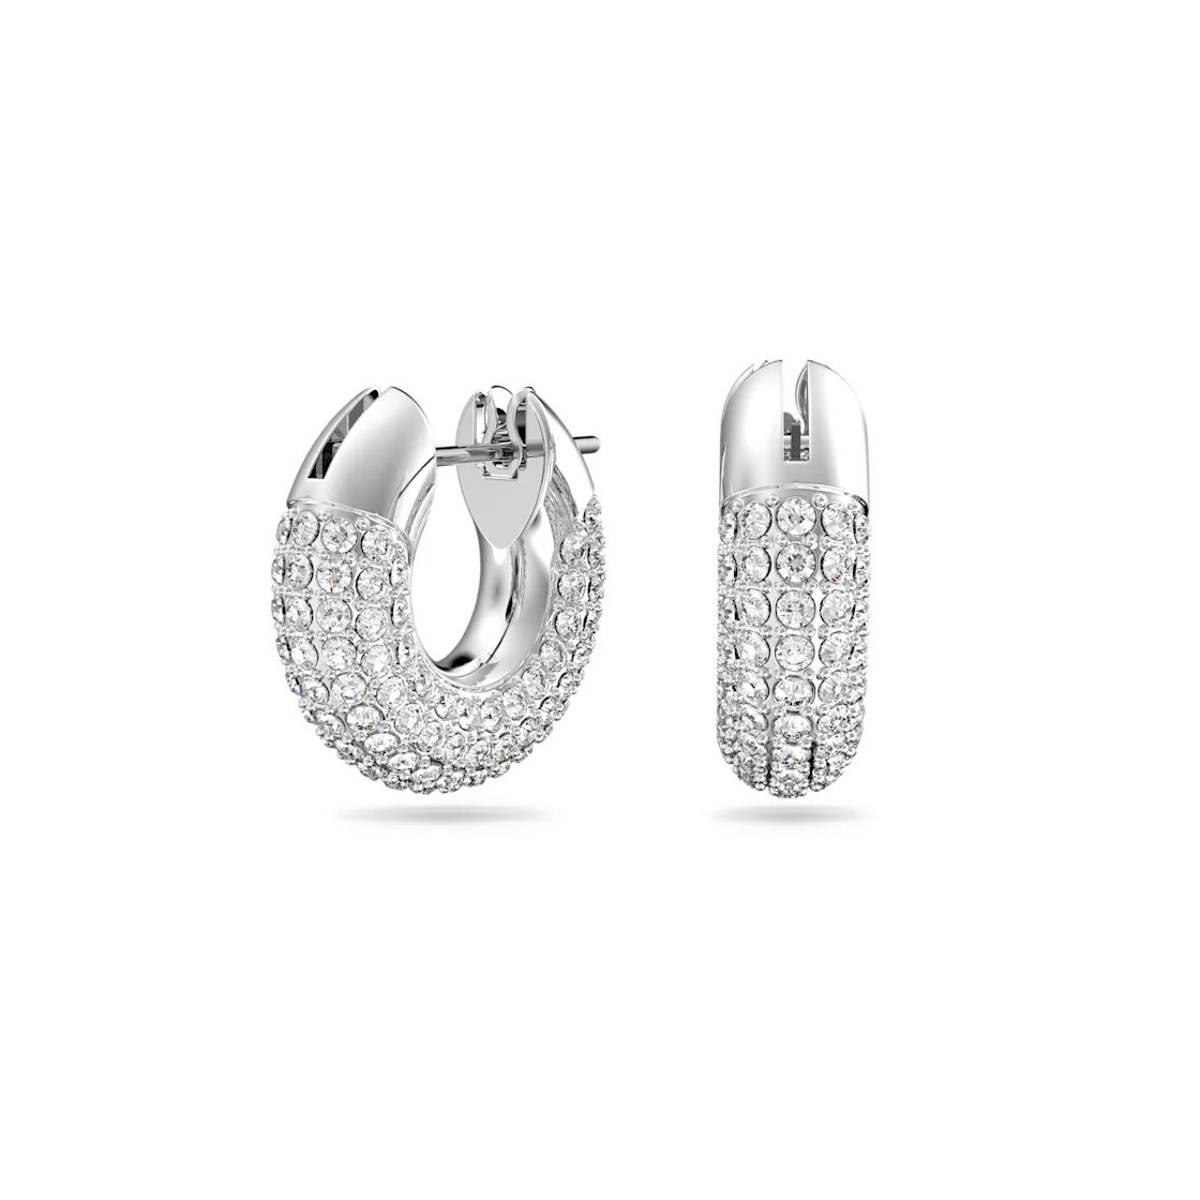 SWAROVSKI earrings 5618306